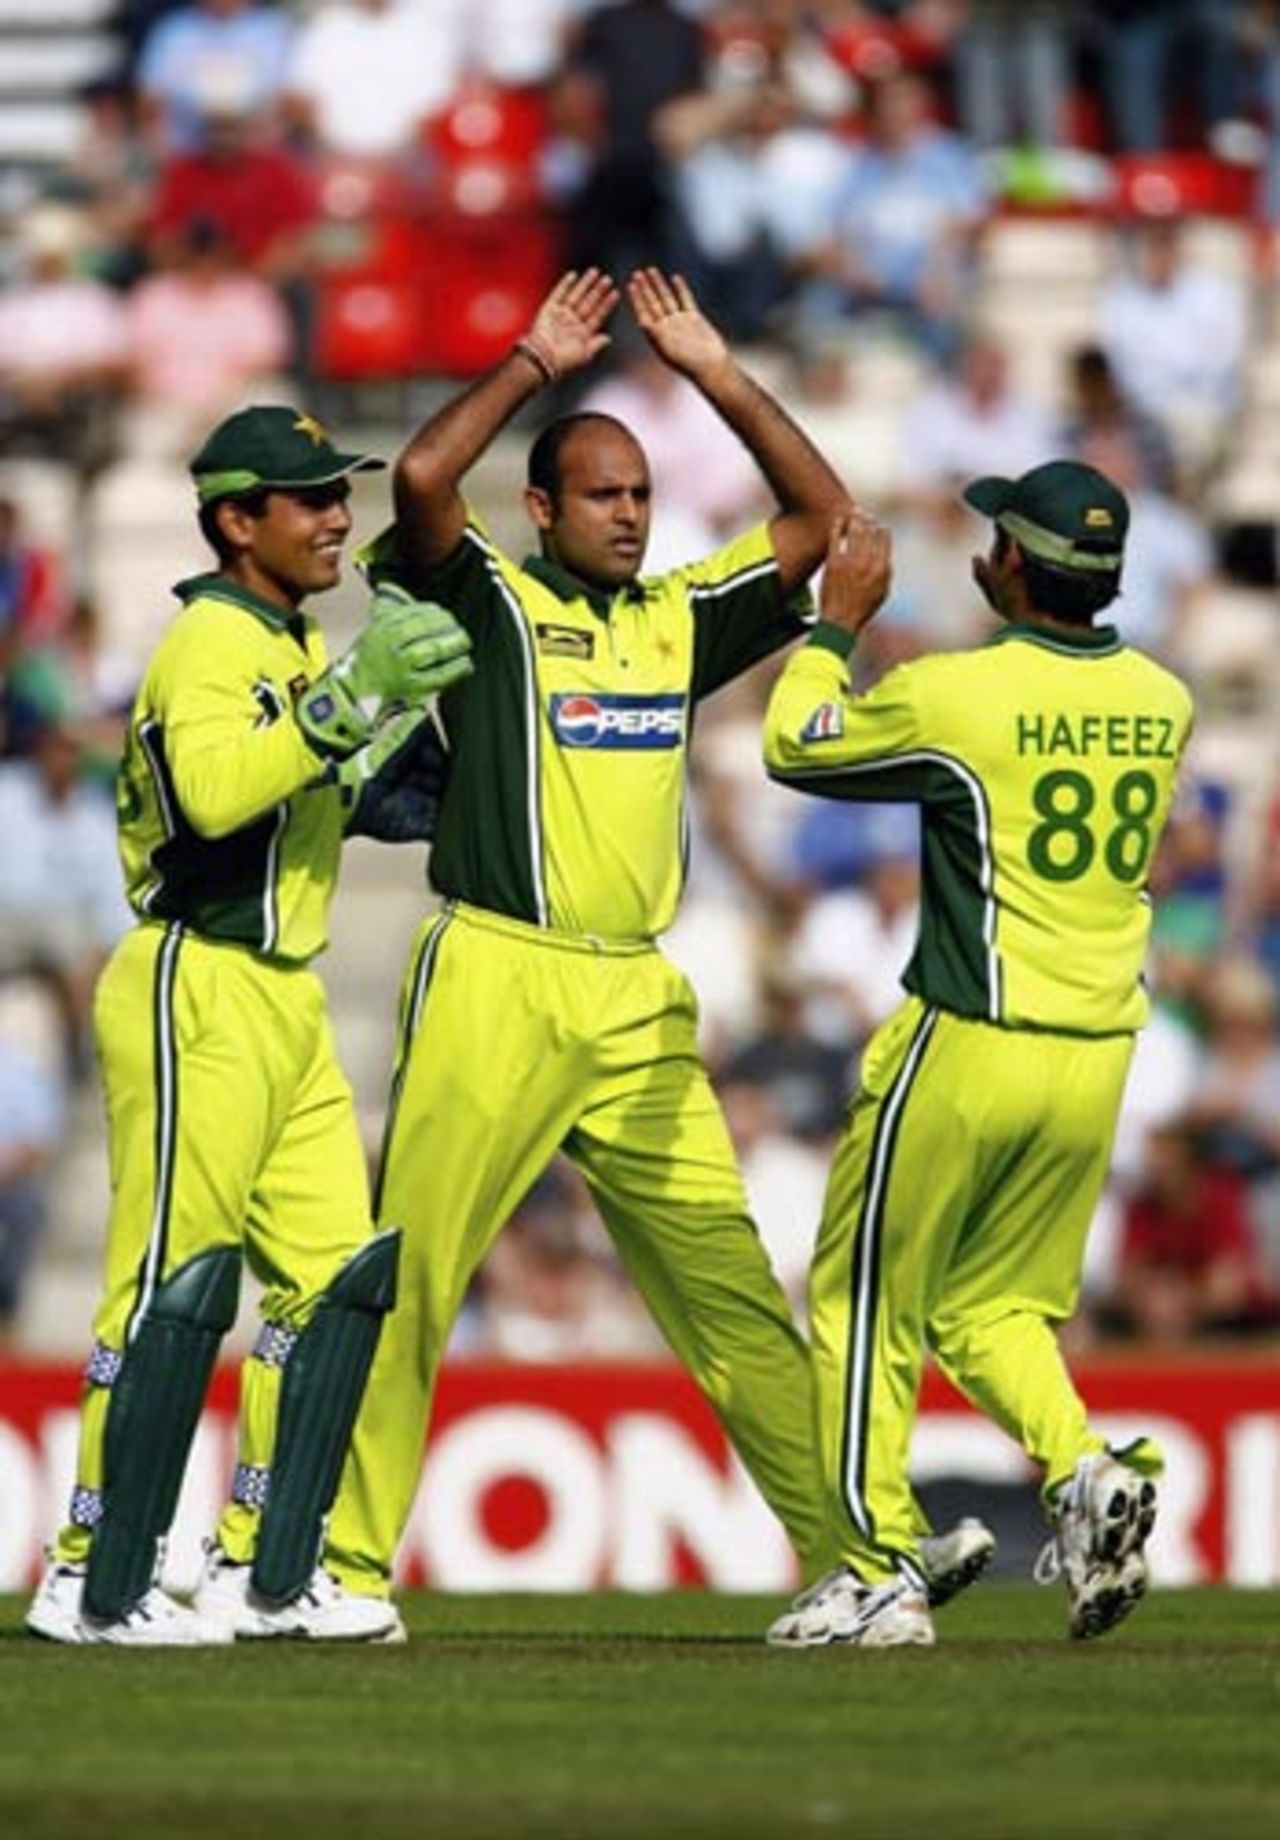 Naved-Ul-Hasan celebrates the key wicket of Kevin Pietersen, England v Pakistan, 3rd ODI, The Rose Bowl, September 5, 2006